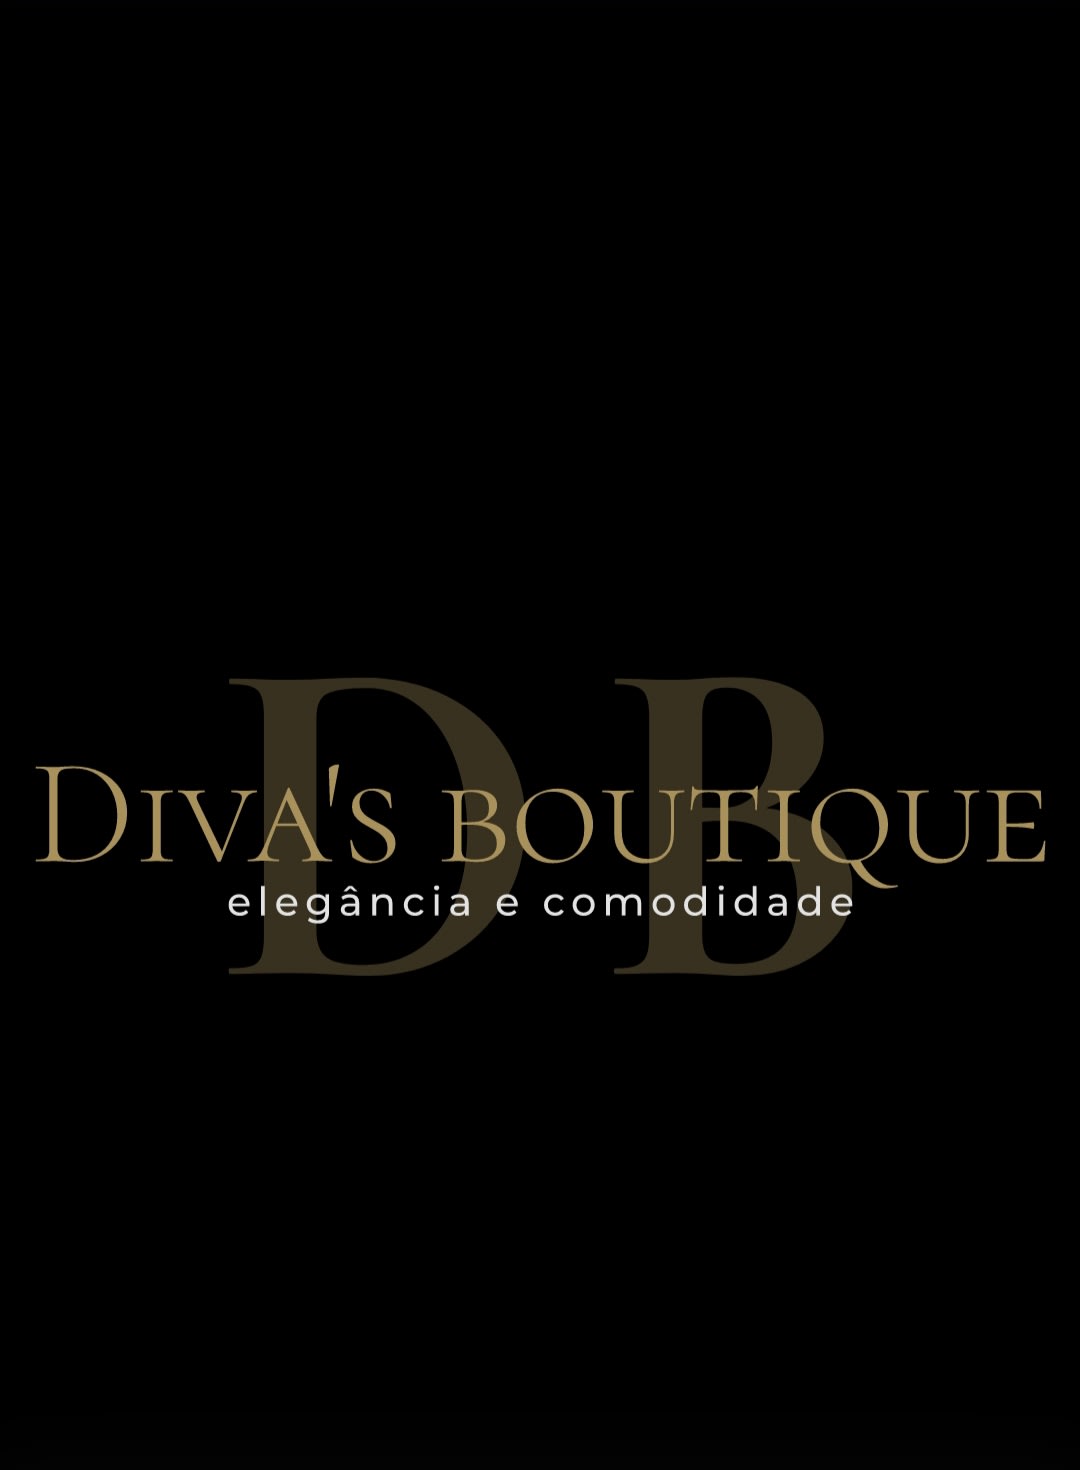 Diva's Boutique